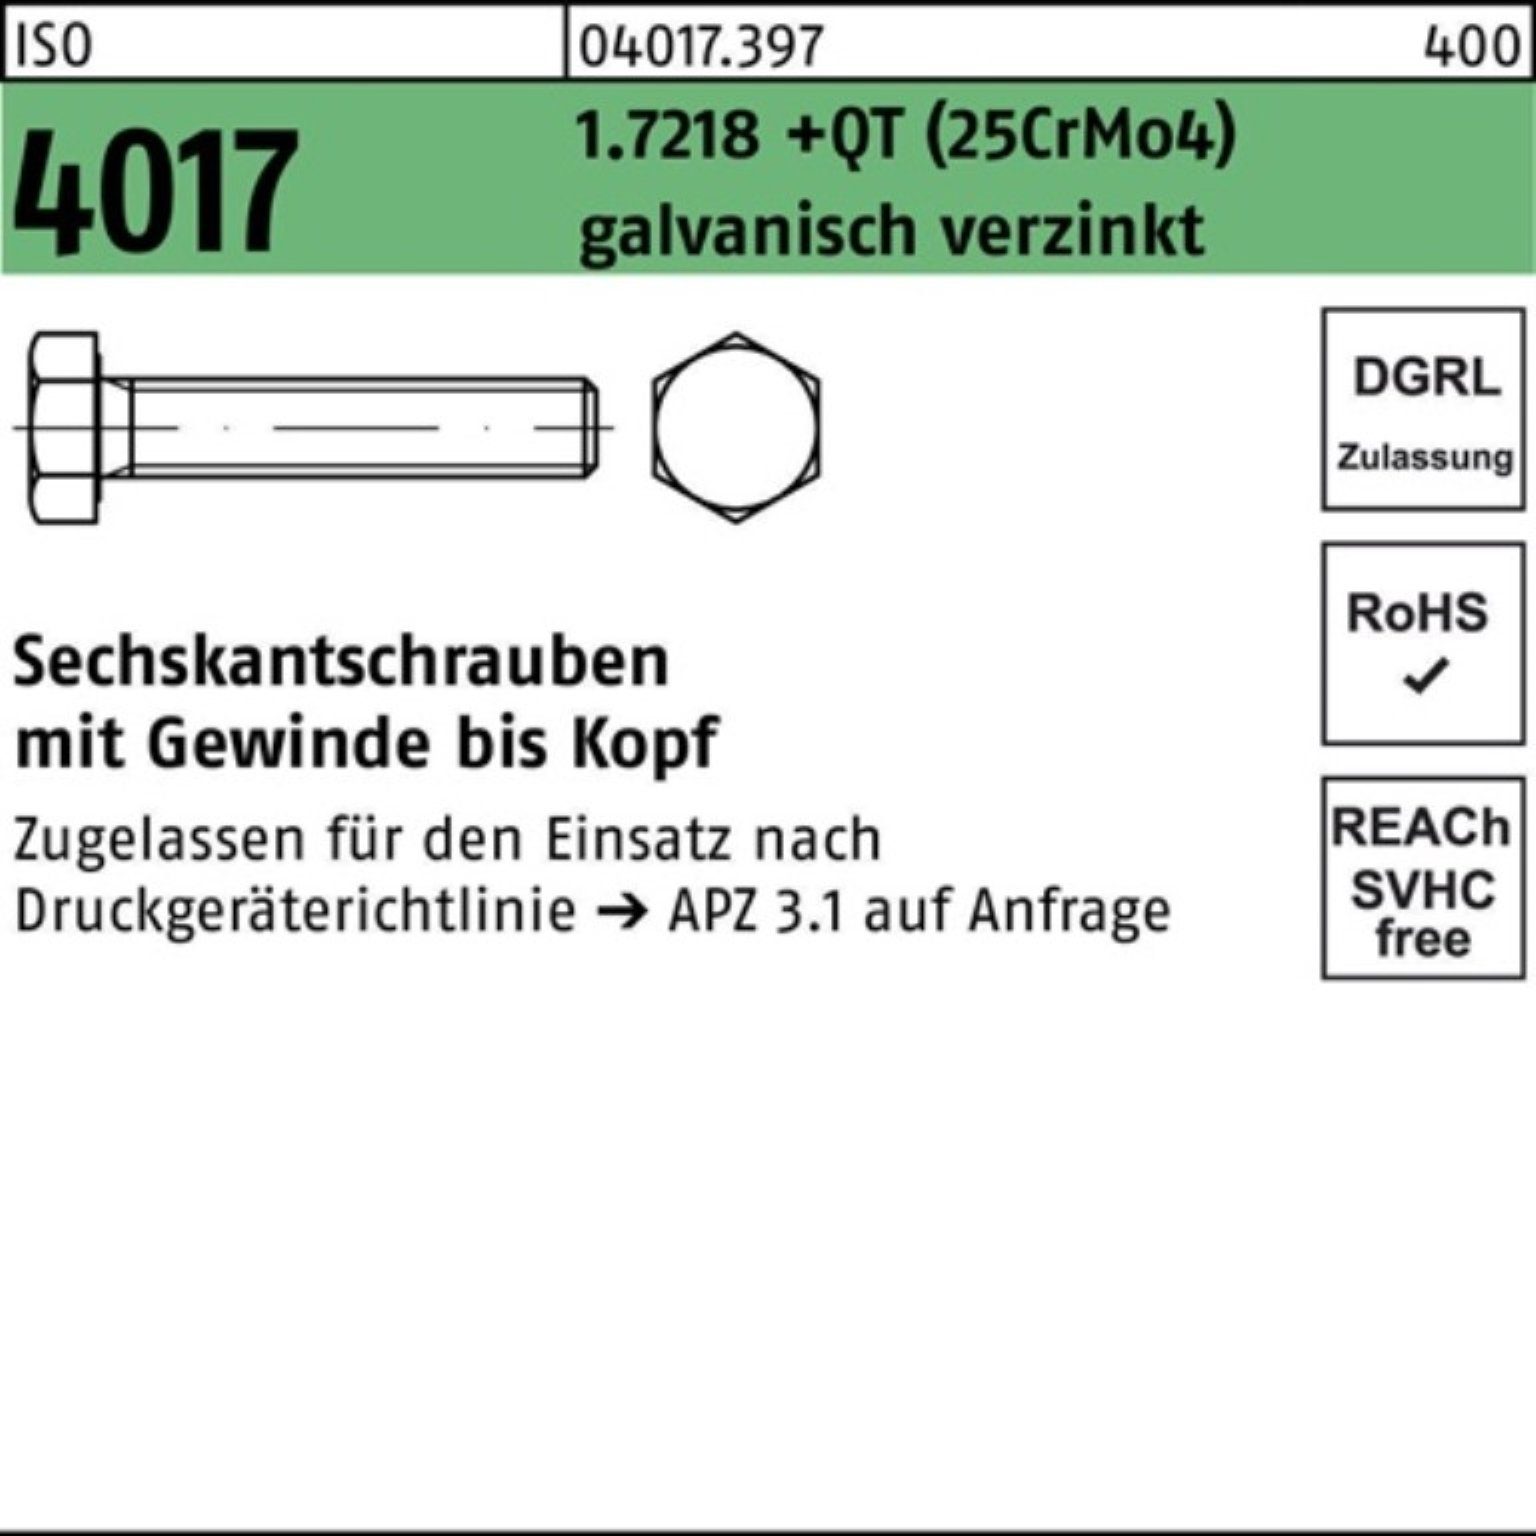 VG Bufab ISO Pack 100er g M20x50 Sechskantschraube Sechskantschraube 1.7218 (25CrMo4) 4017 +QT